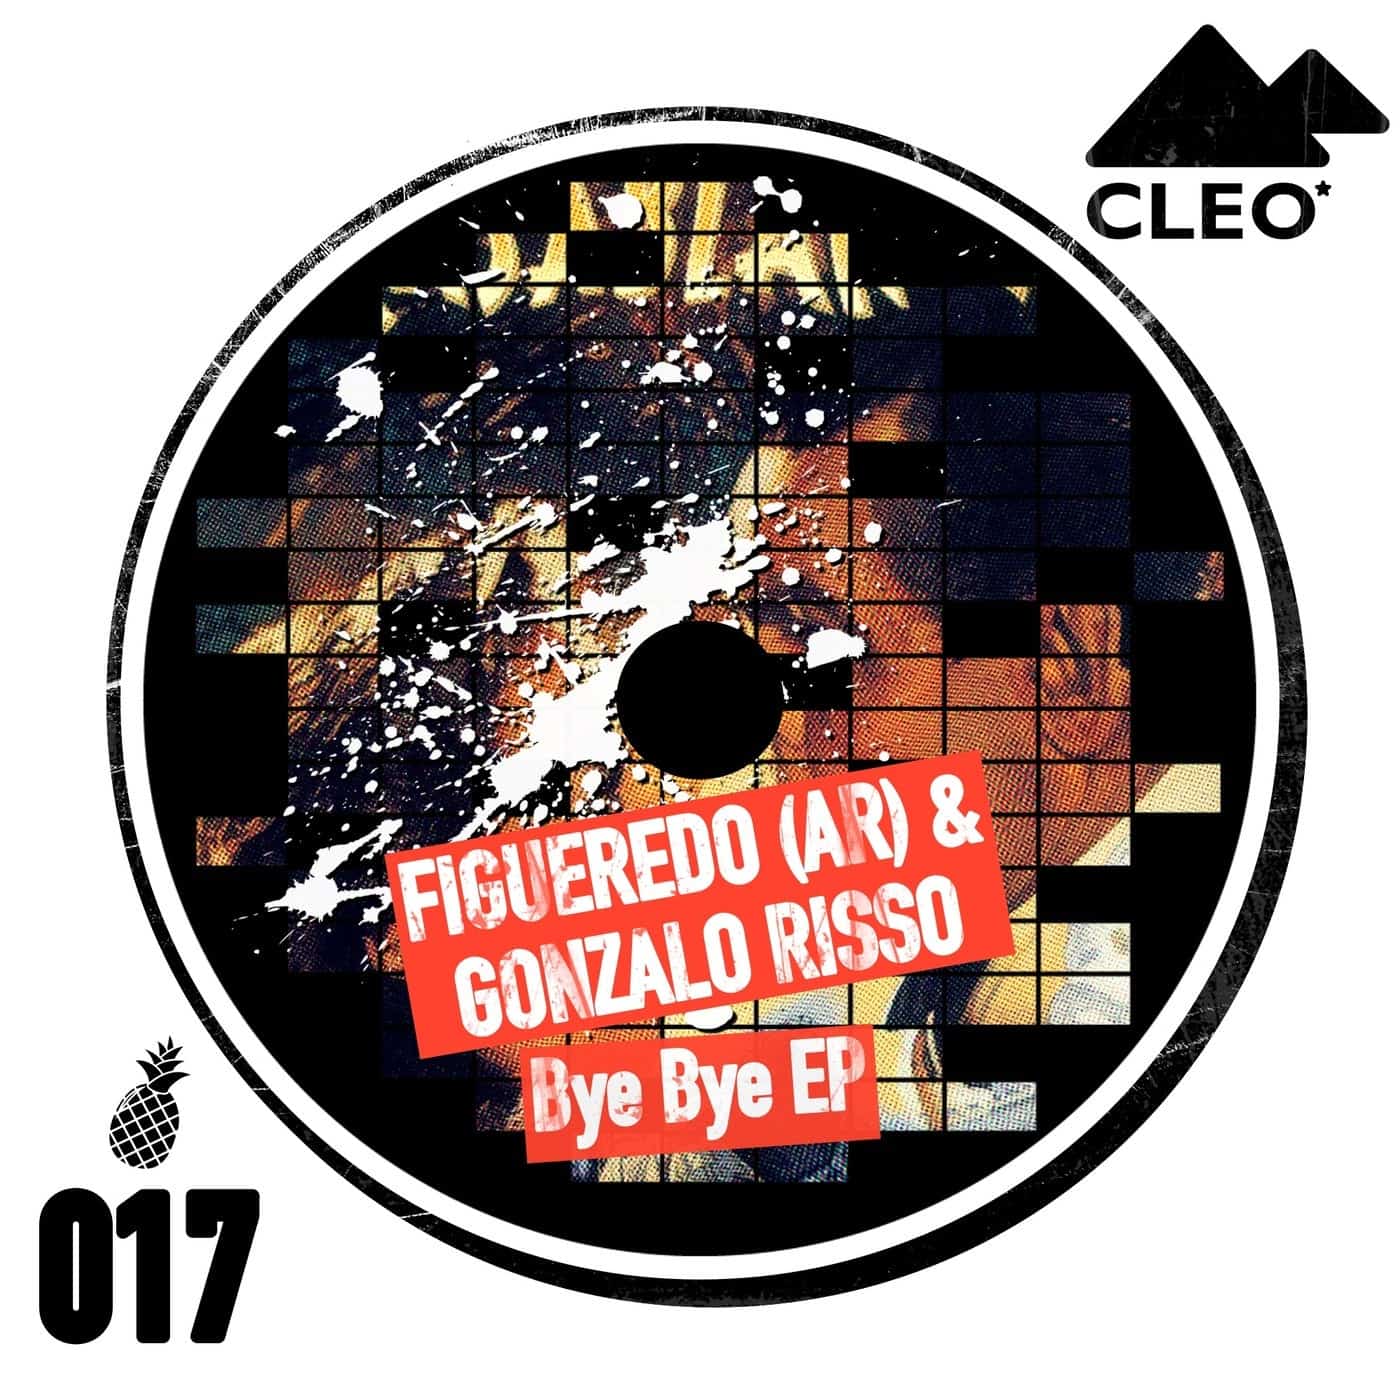 Download Figueredo (AR), Gonzalo Risso - Bye Bye EP on Electrobuzz